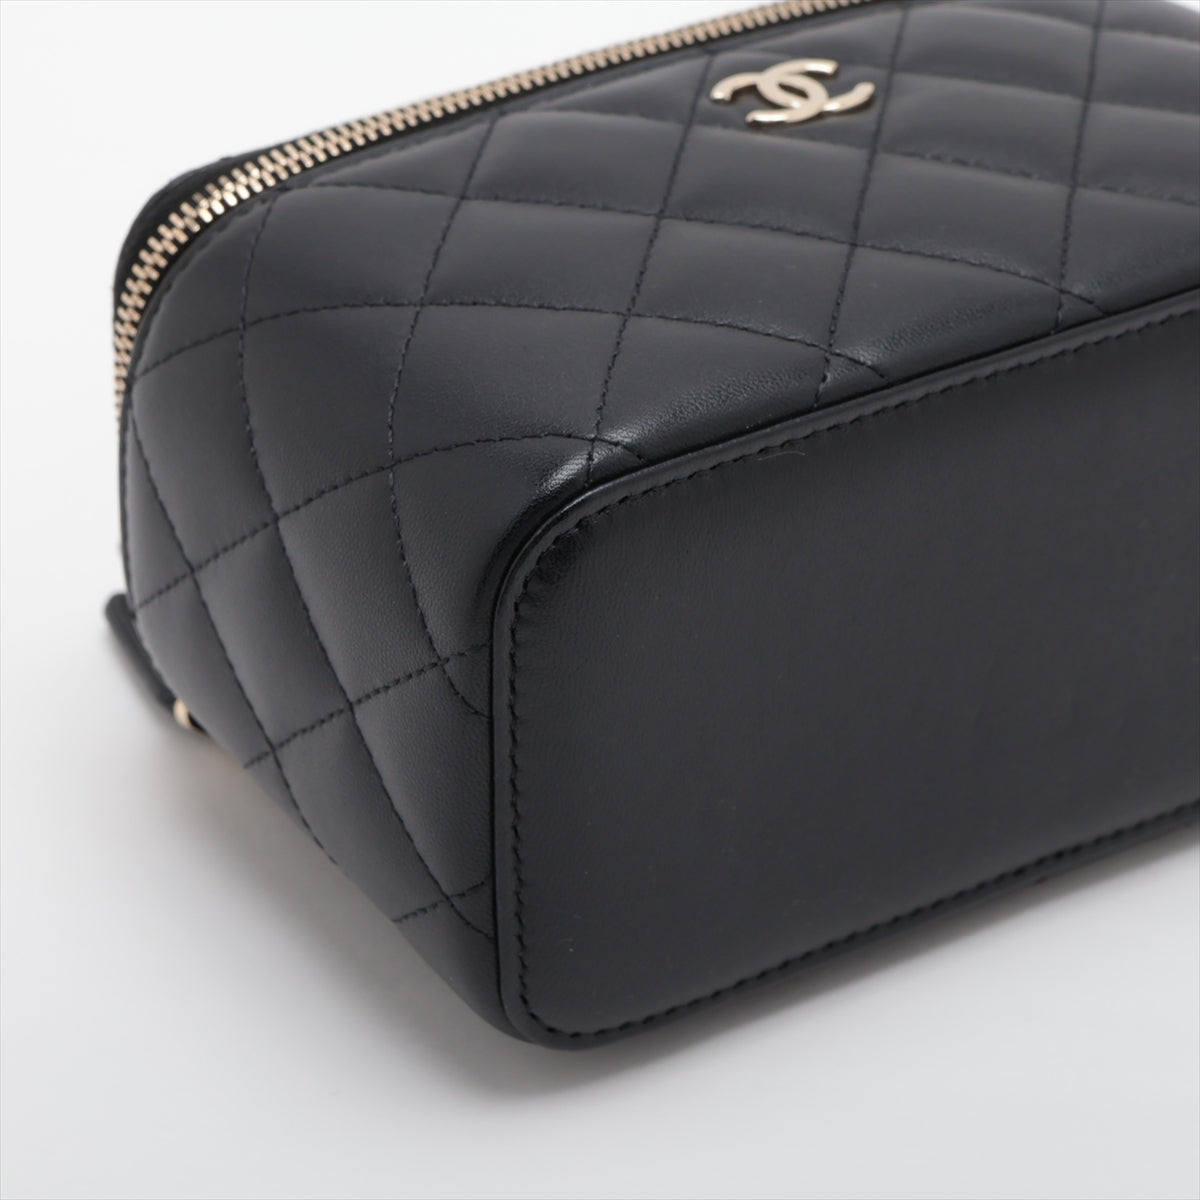 Chanel Matelasse Lambskin Chain Shoulder Bag Vanity Black Gold Metal Fittings 31st